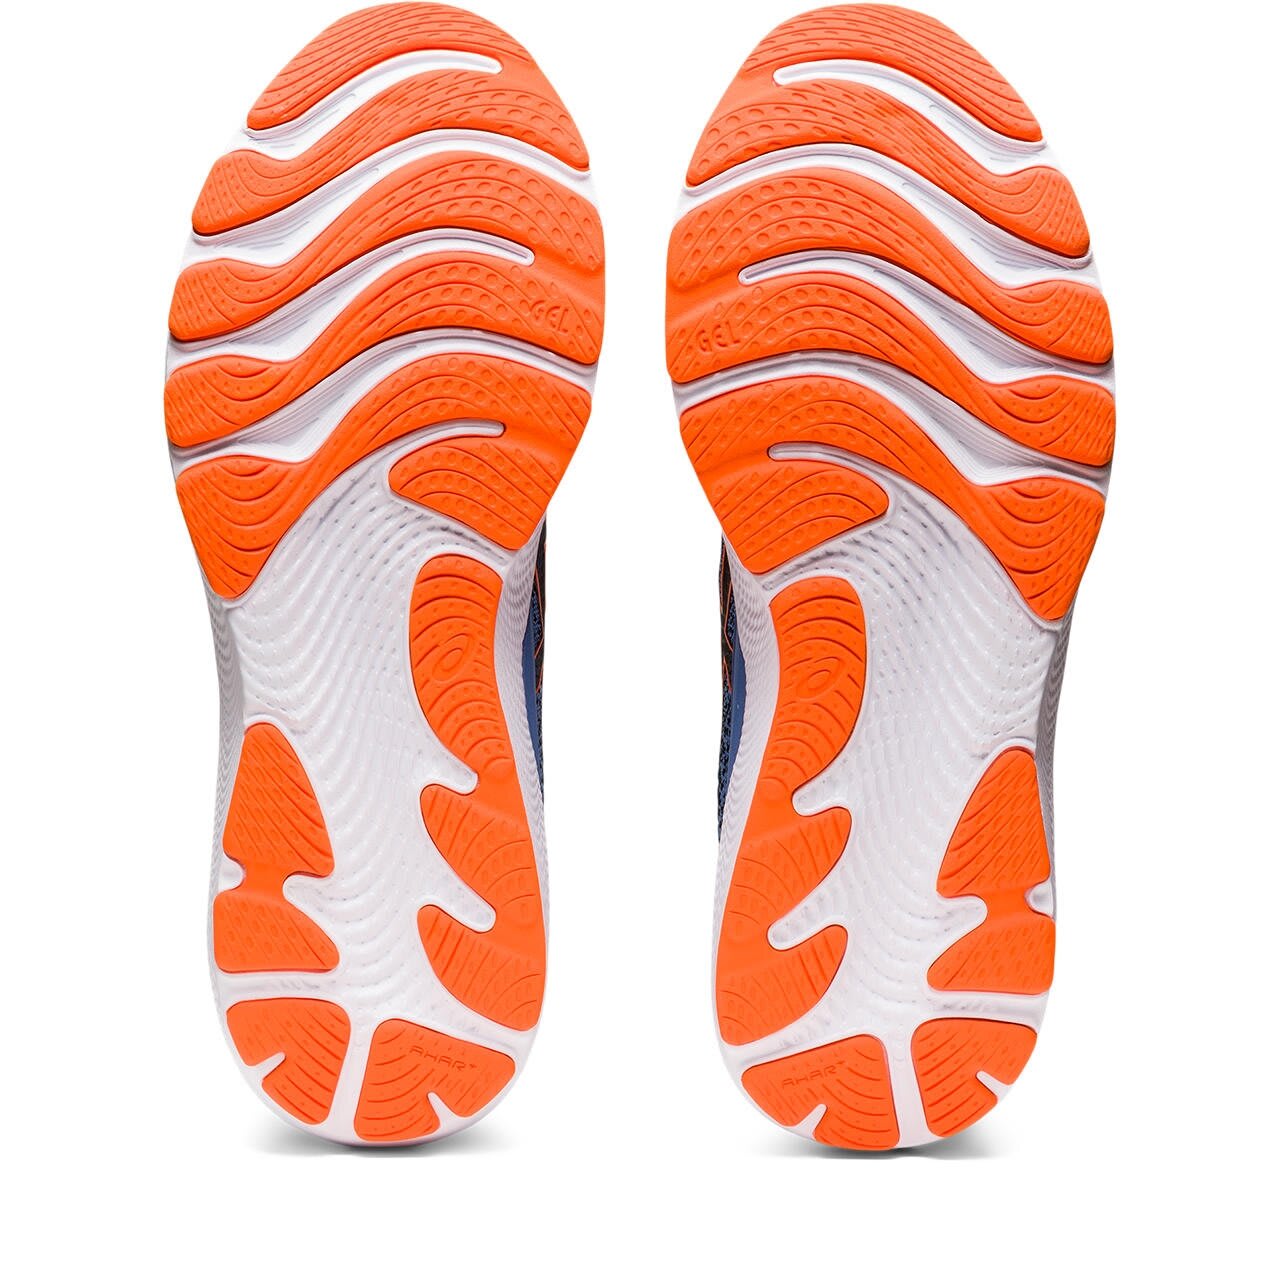 Asics Men's Gel-Cumulus 24 Road Running Shoes | Sportsmans Warehouse Kiosk